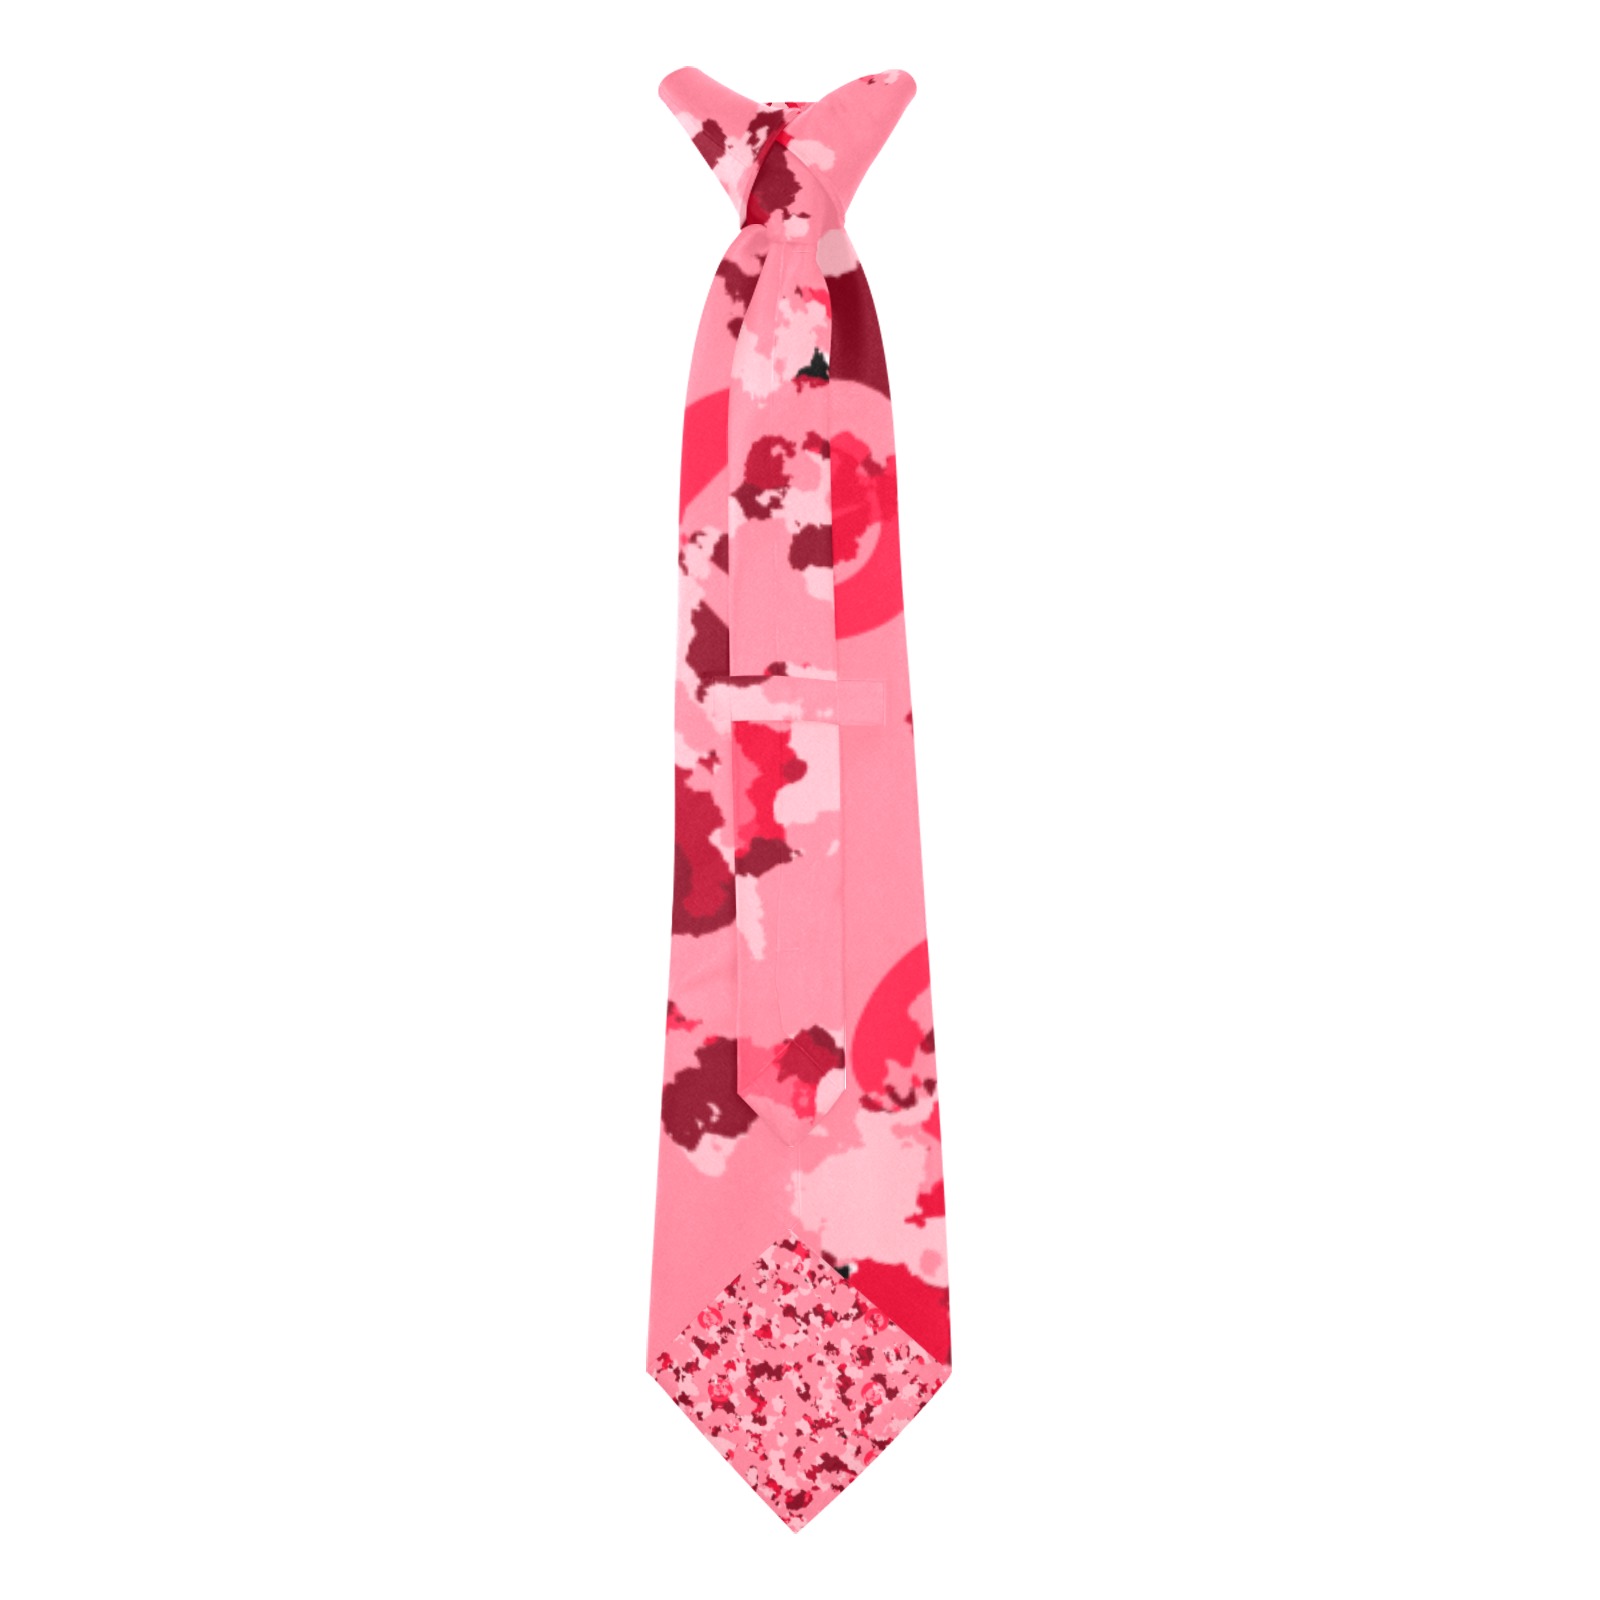 New Project (2) (5) Custom Peekaboo Tie with Hidden Picture